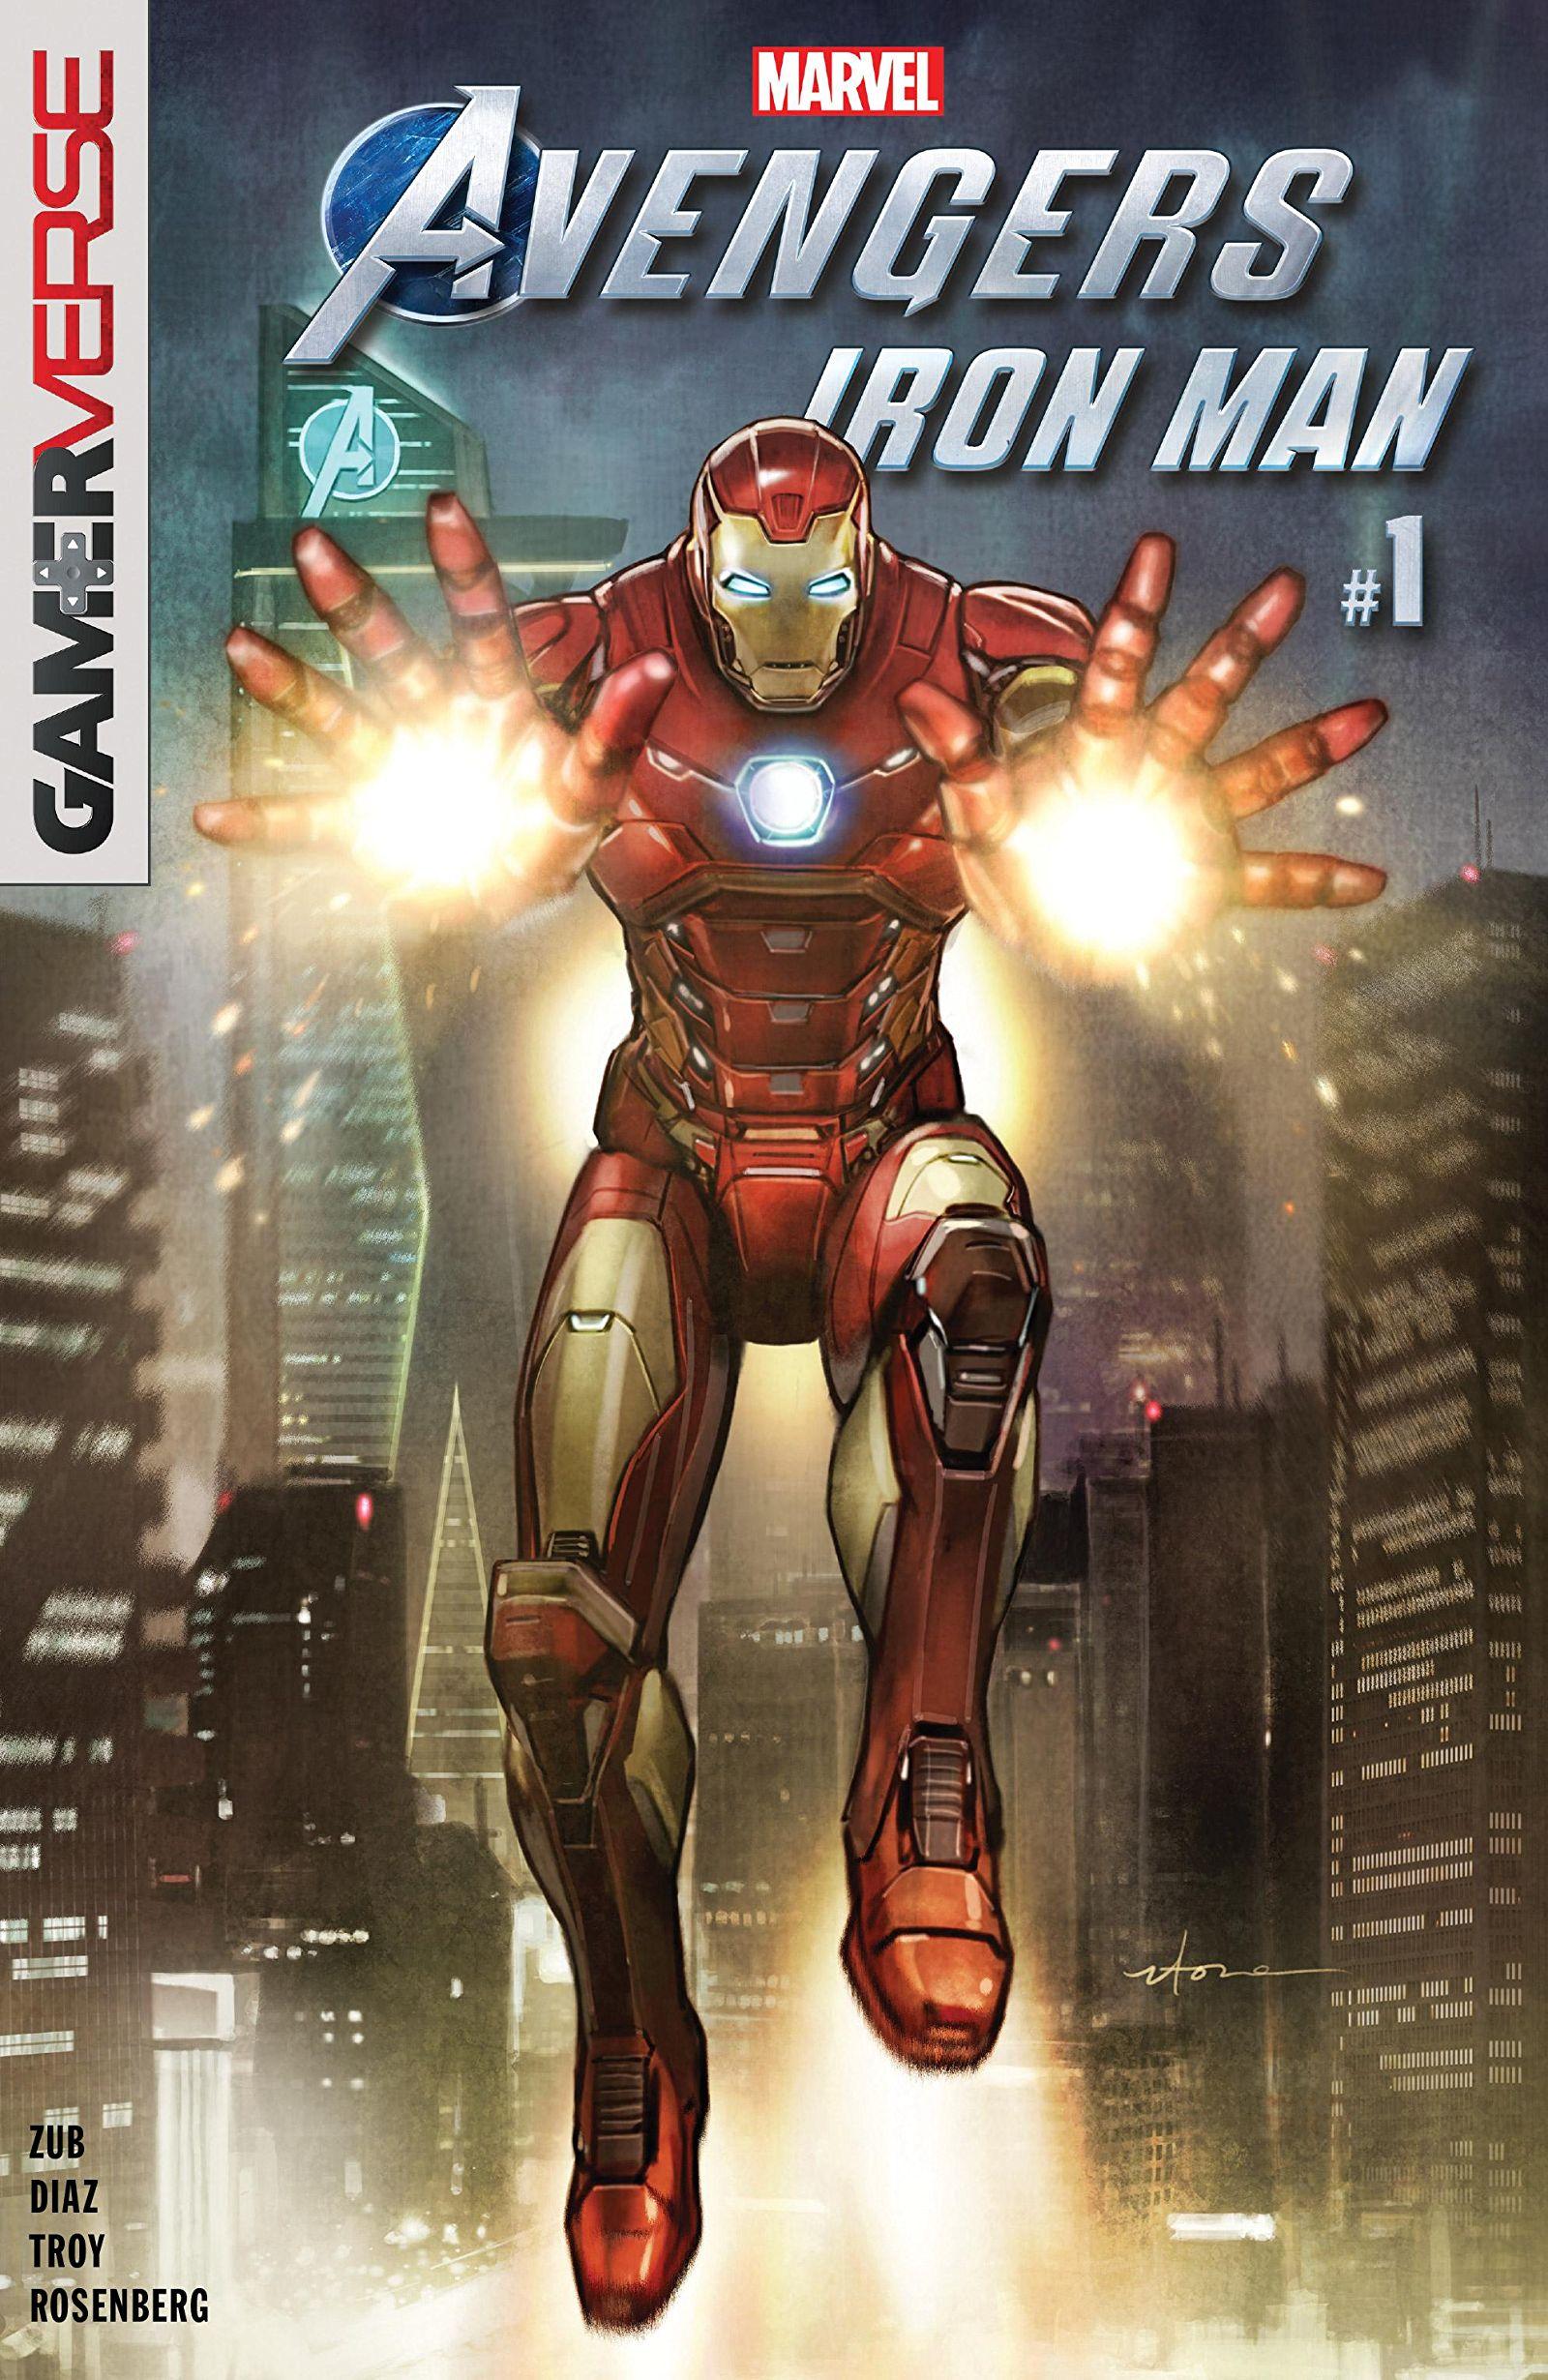 Marvel's Avengers: Iron Man Vol. 1 #1